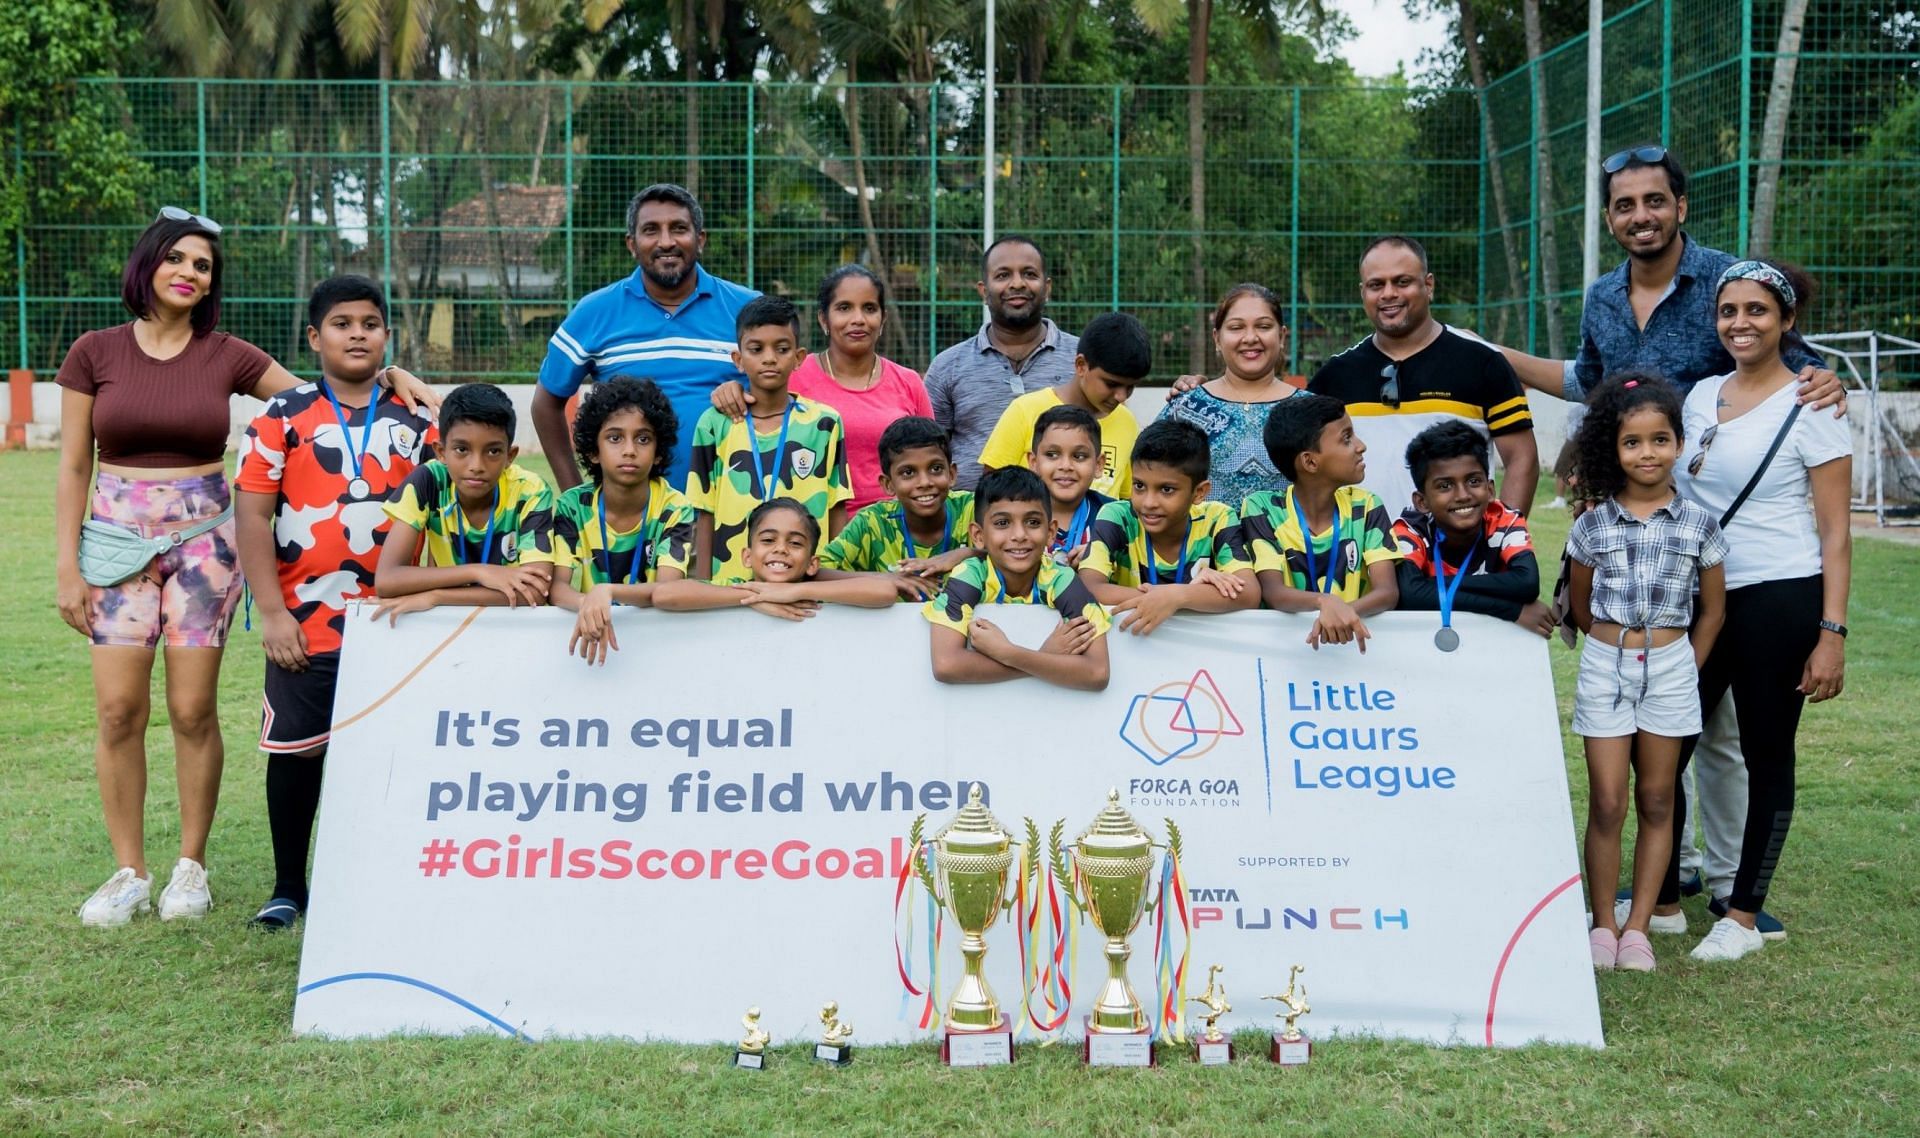 The Little Gaurs League concluded on Saturday. (Image Courtesy - FC Goa/Forca Goa Foundation)